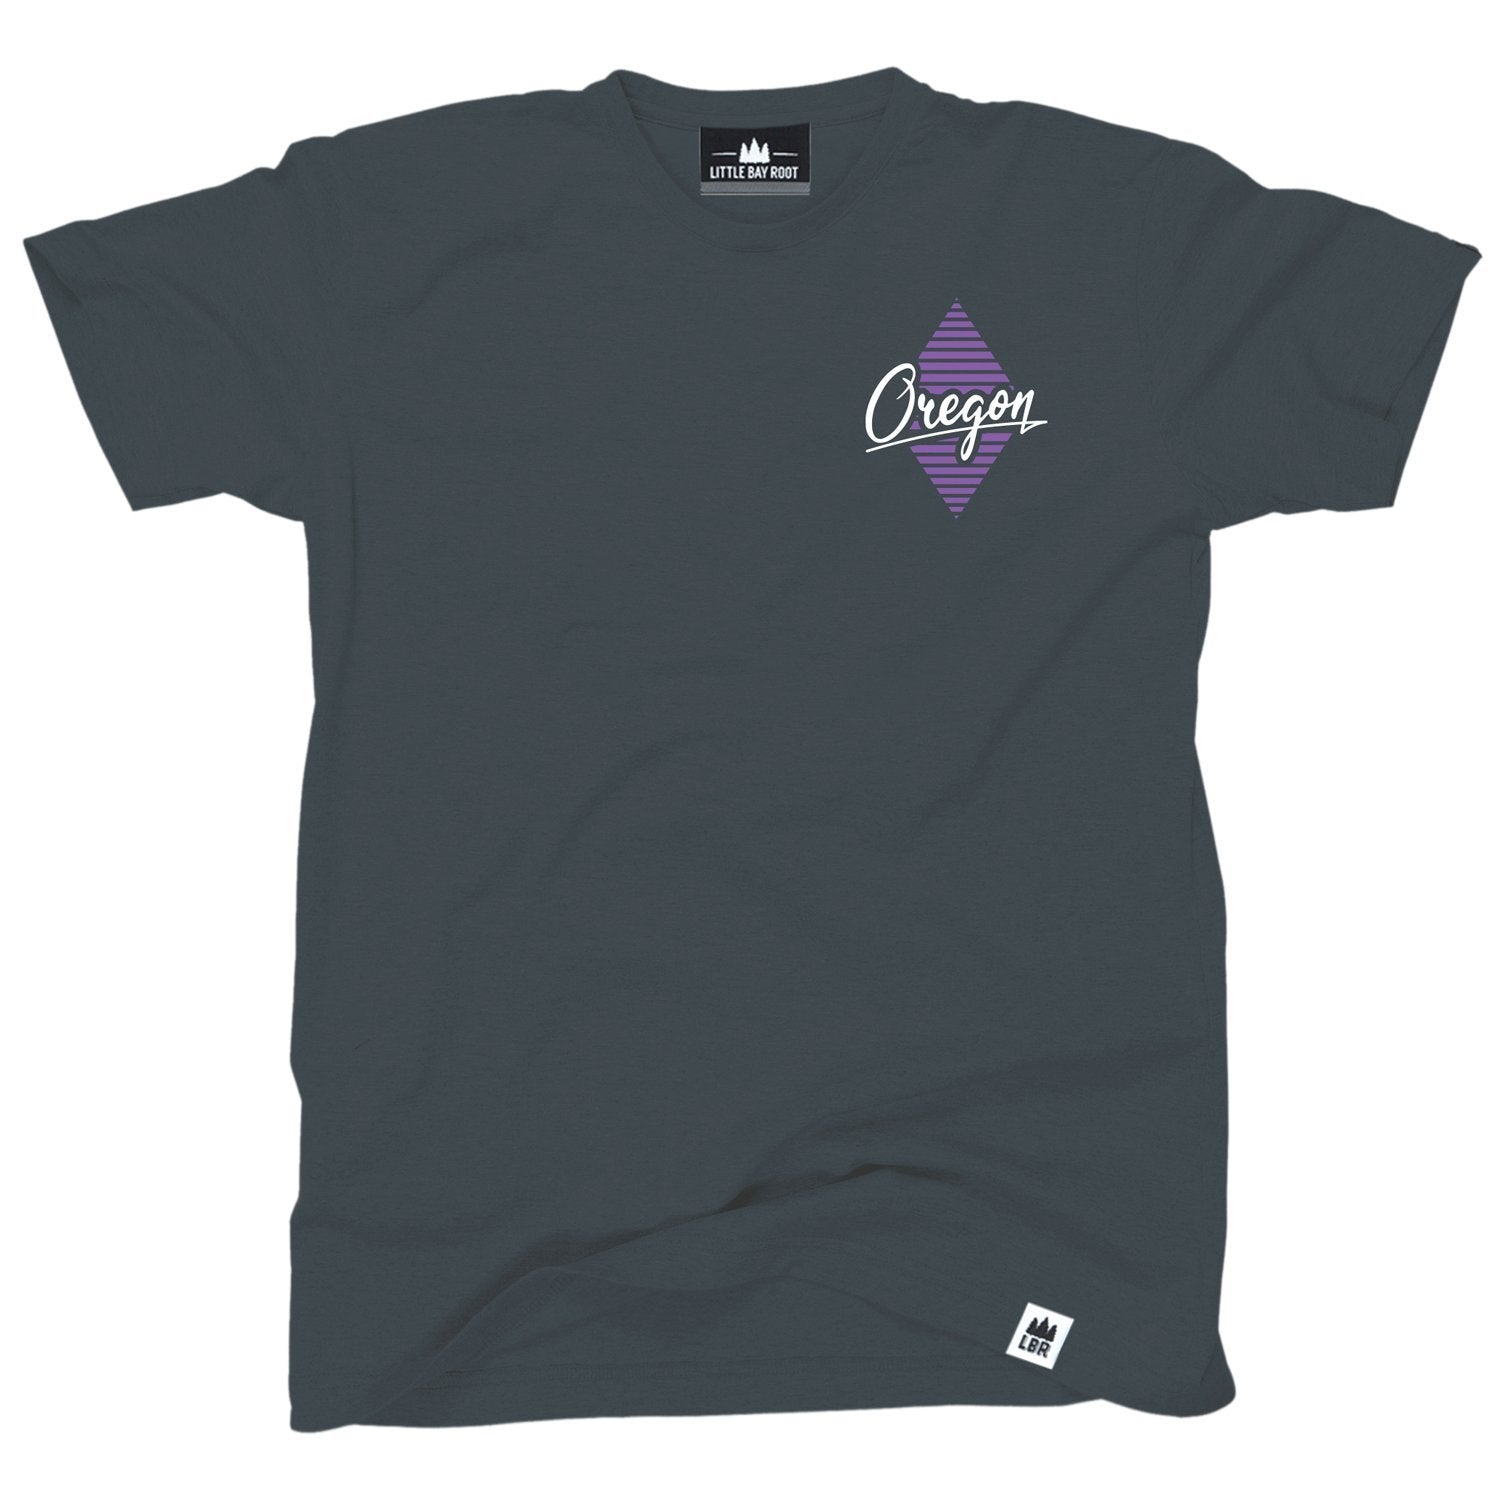 Oregon Vice | Adult t-shirt